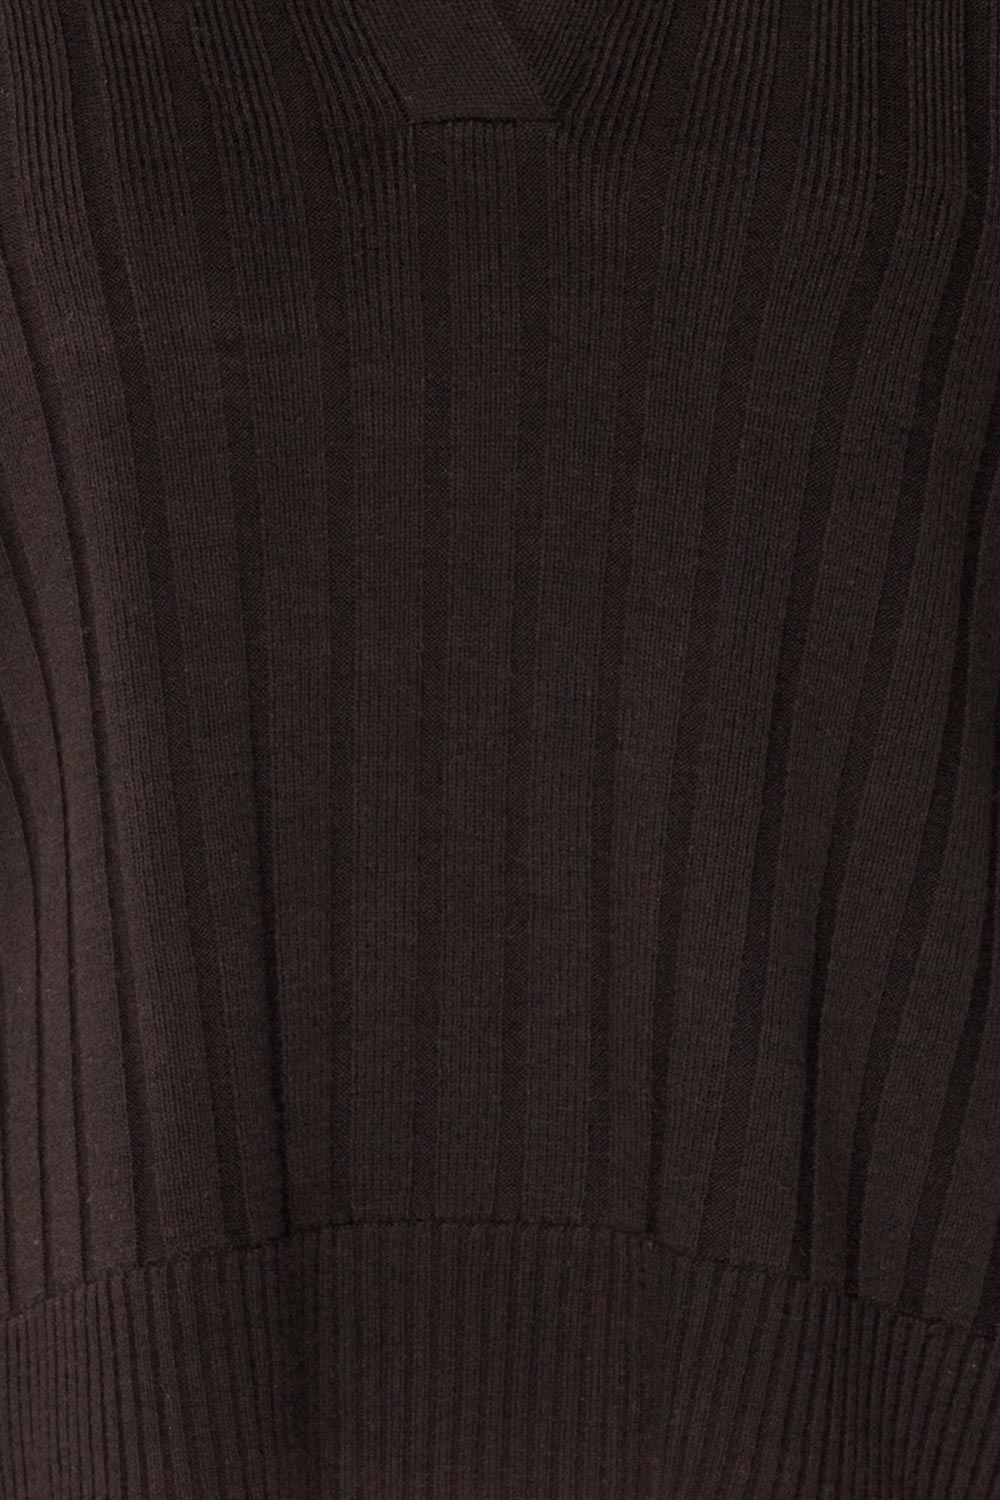 Beluth Black Collared Long Sleeve Top | La petite garçonne fabric 